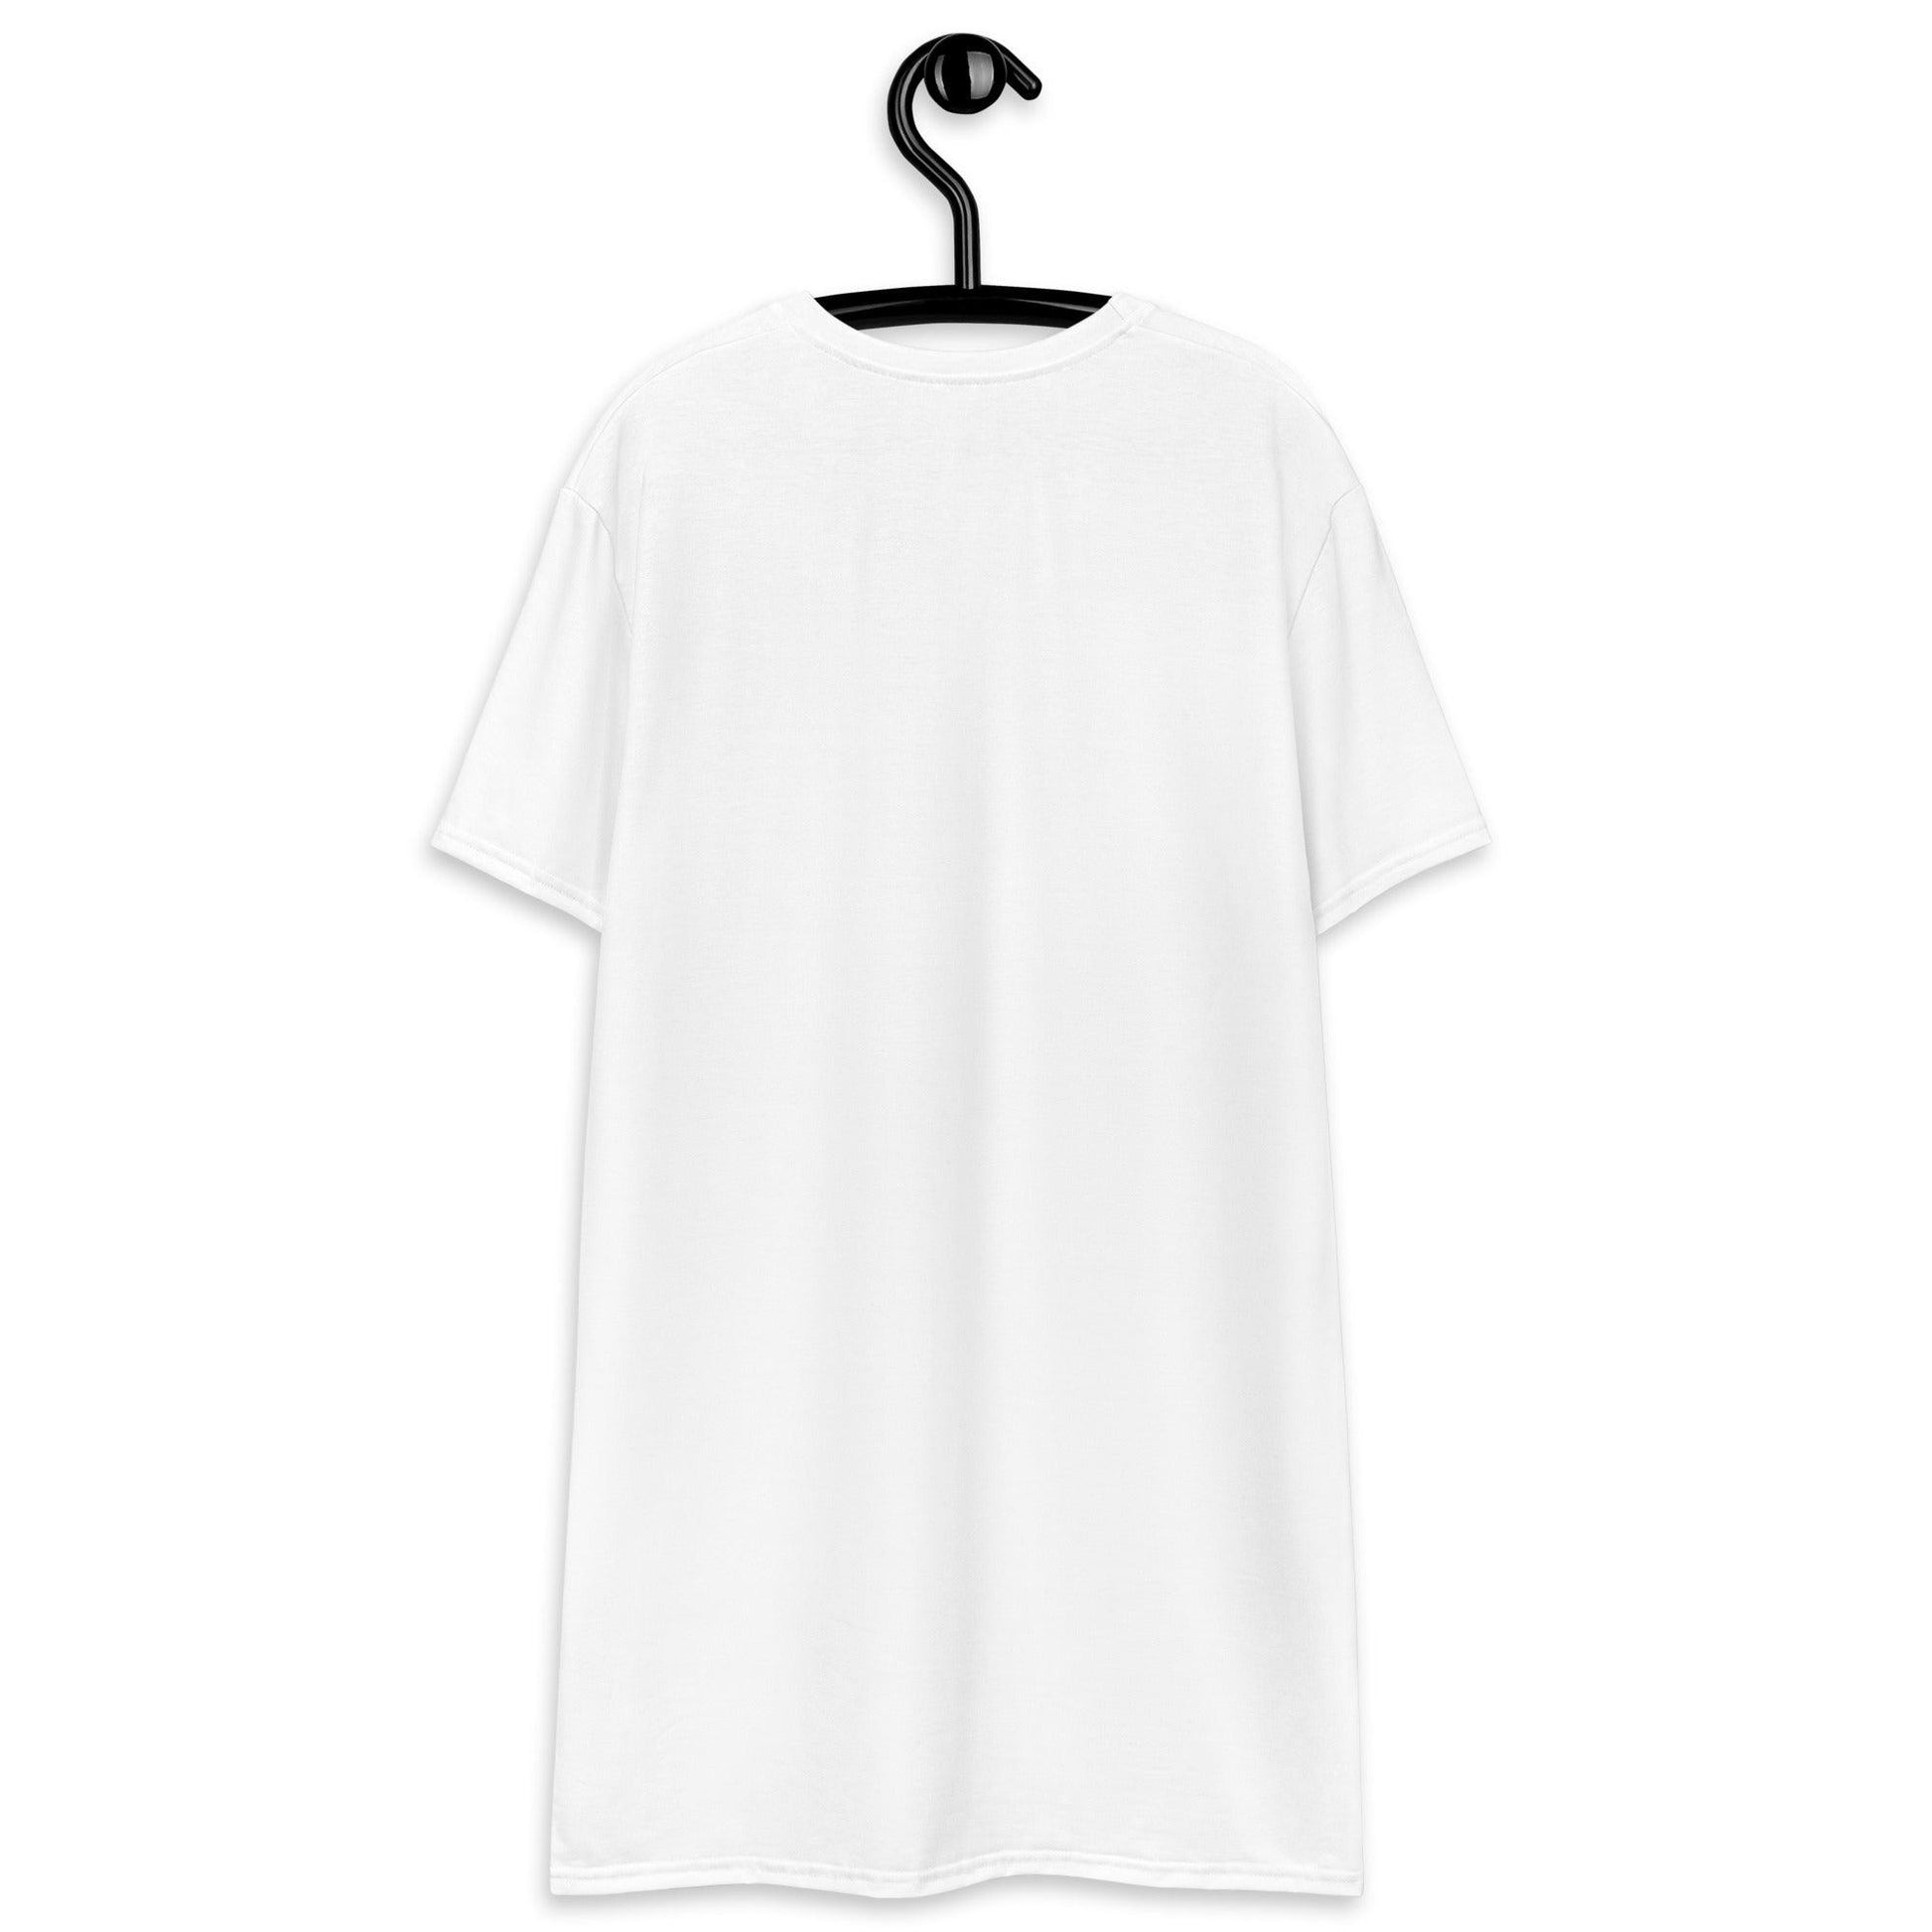 Sweet Child Of Wine - Womens White T-Shirt Dress - iSAW Company